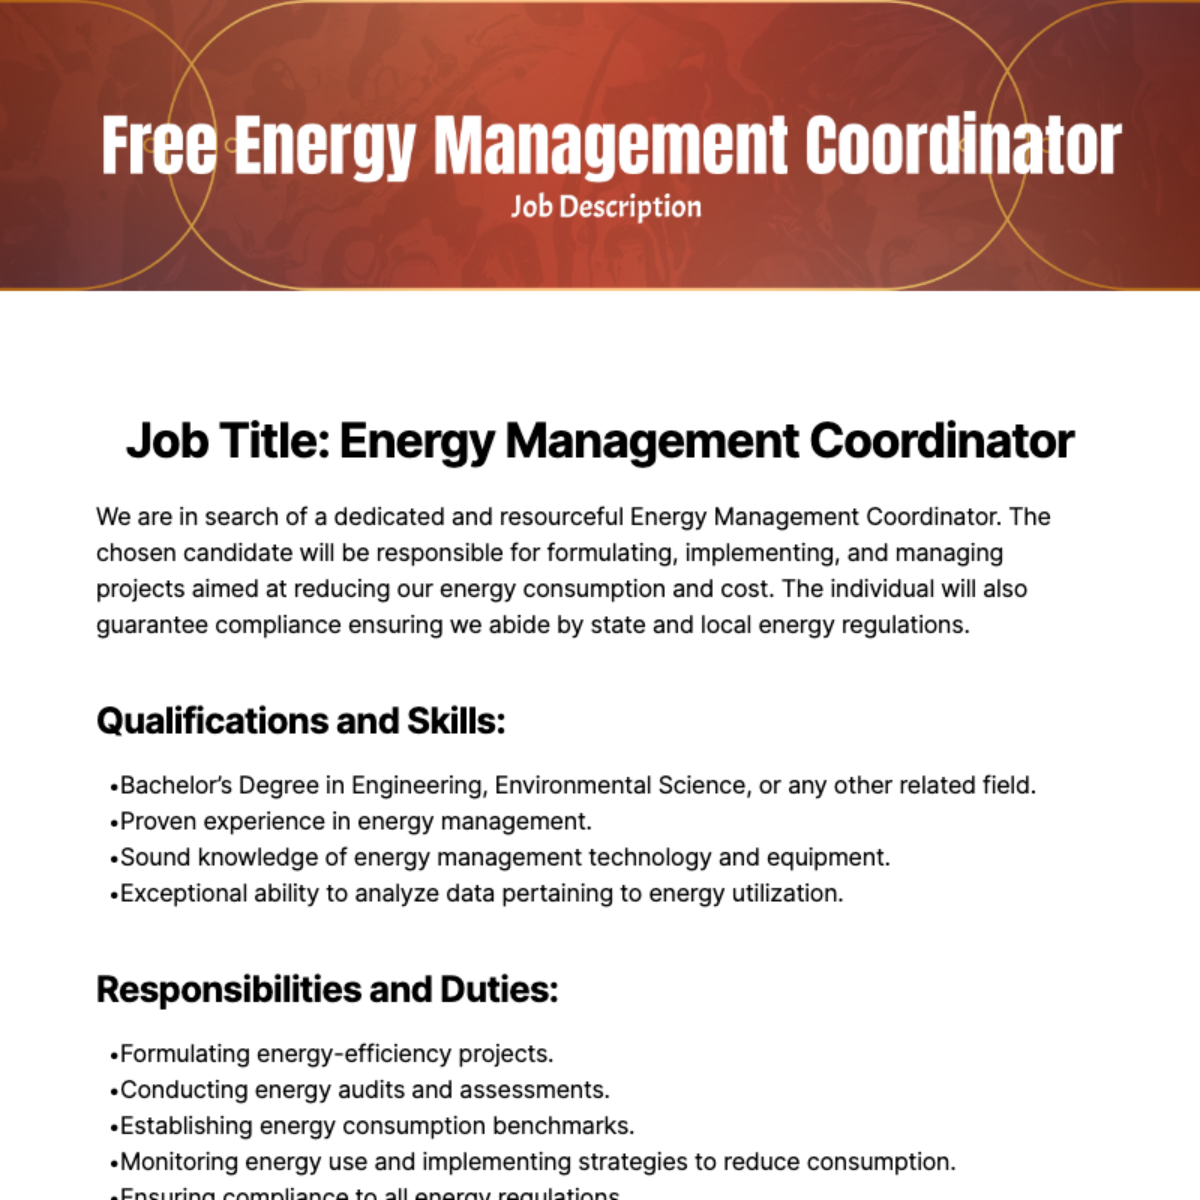 Free Energy Management Coordinator Job Description Template